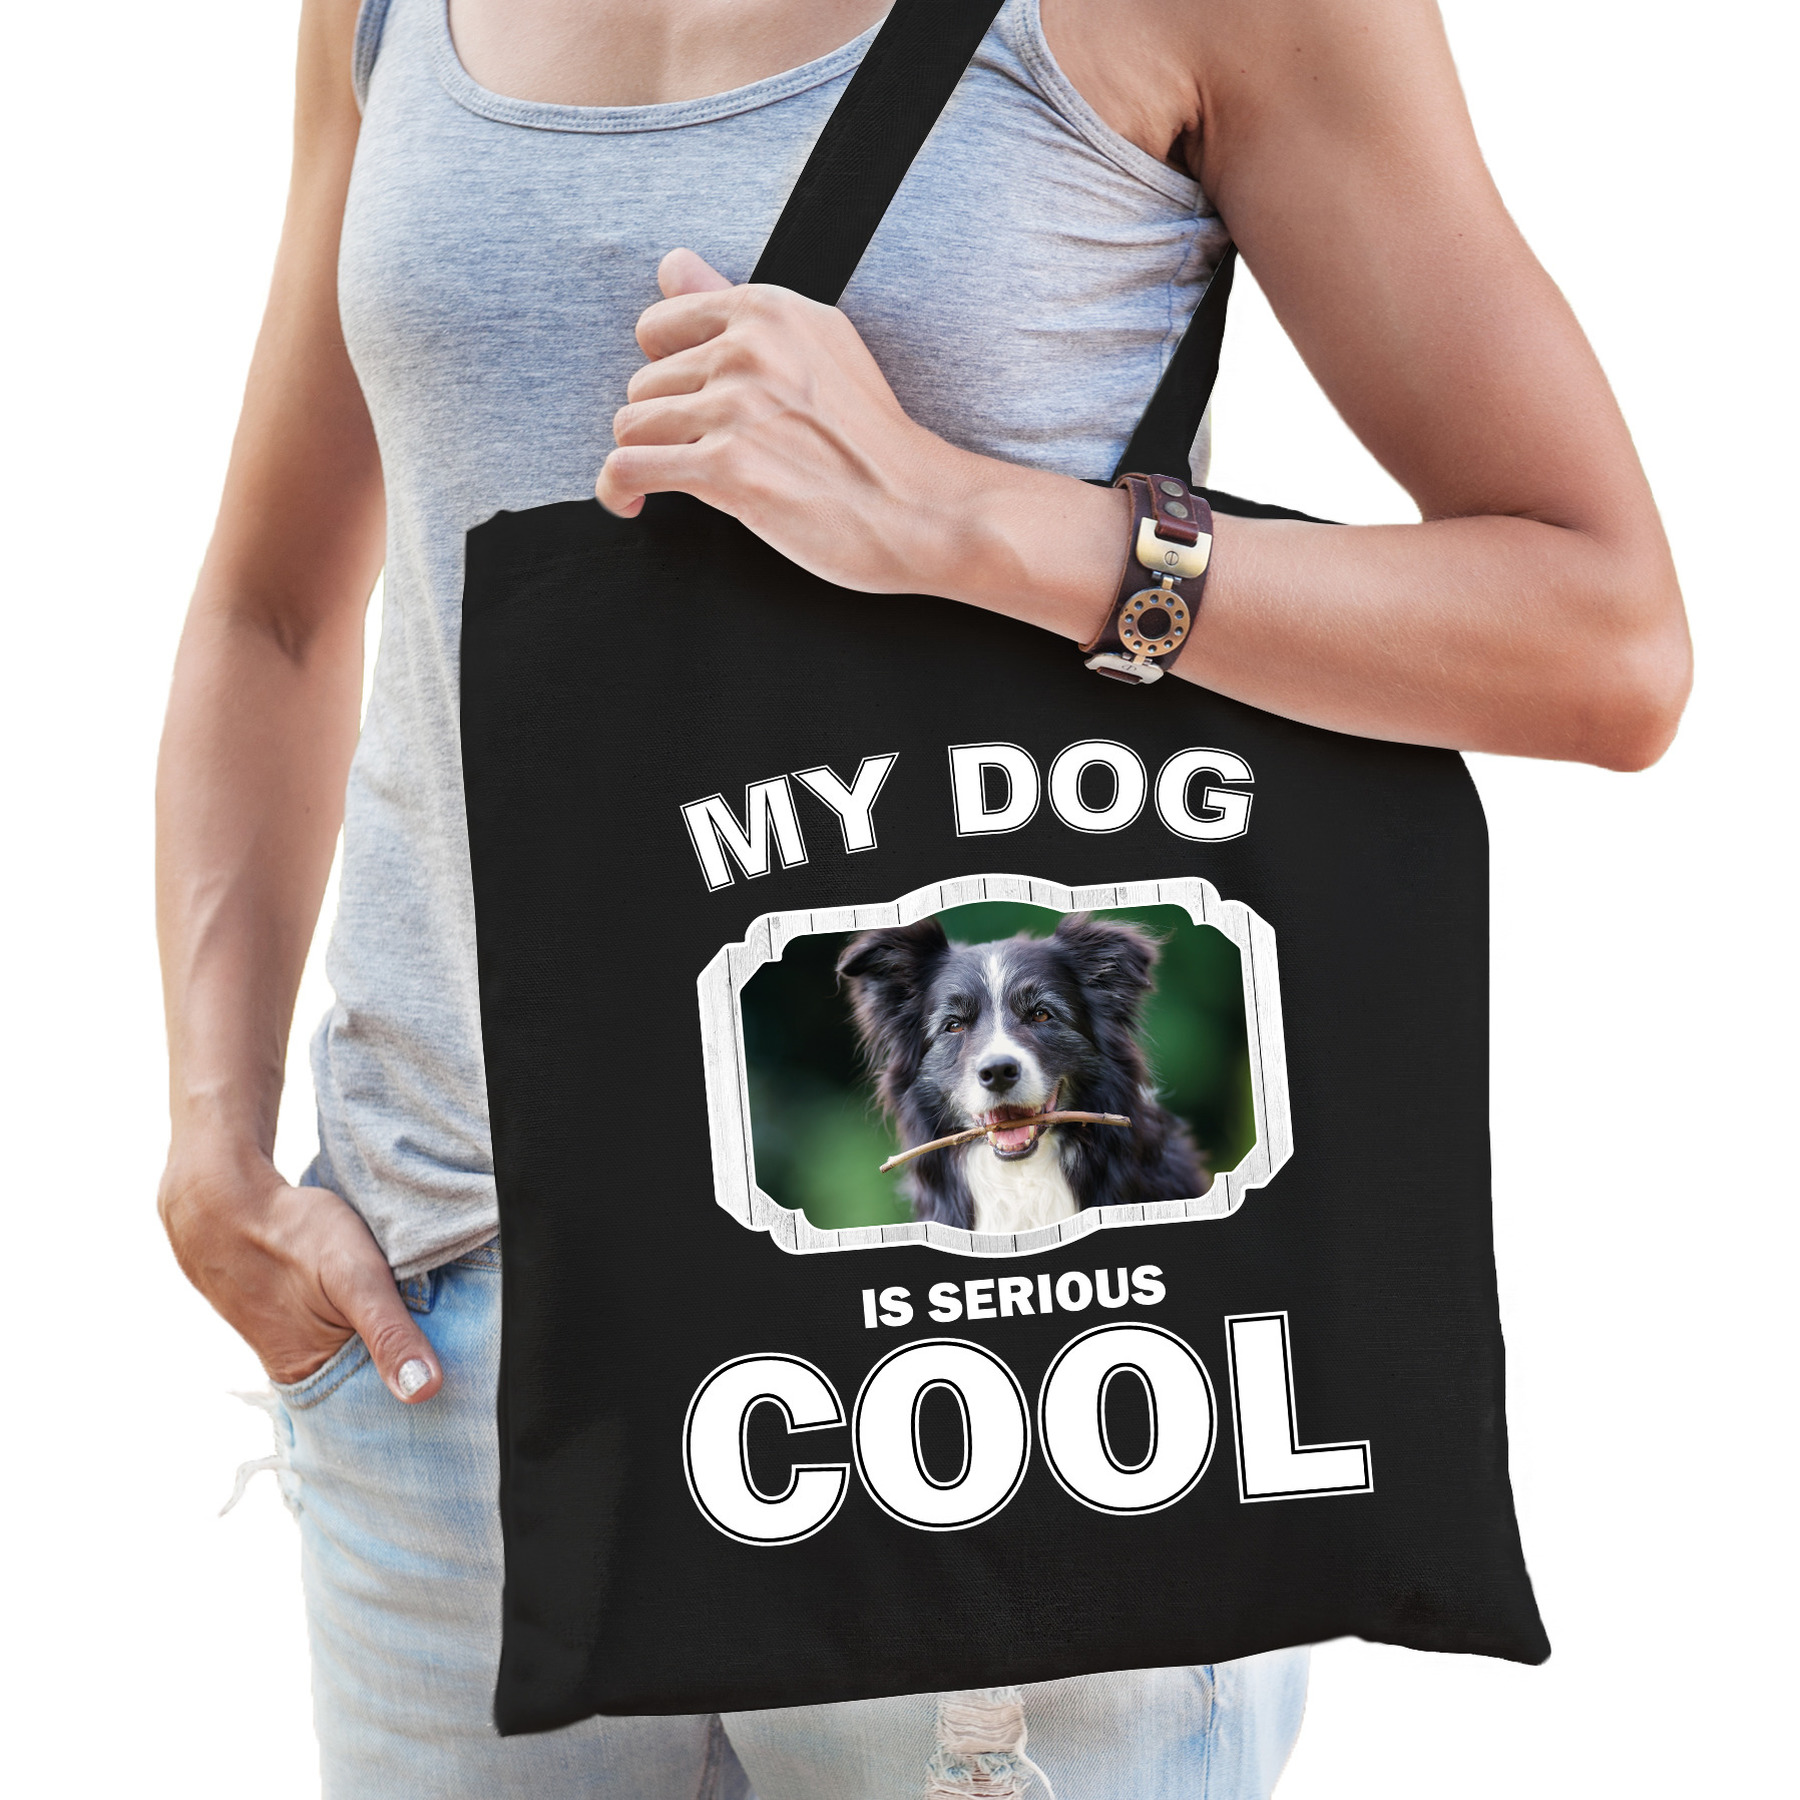 Katoenen tasje my dog is serious cool zwart - Border collie honden cadeau tas -